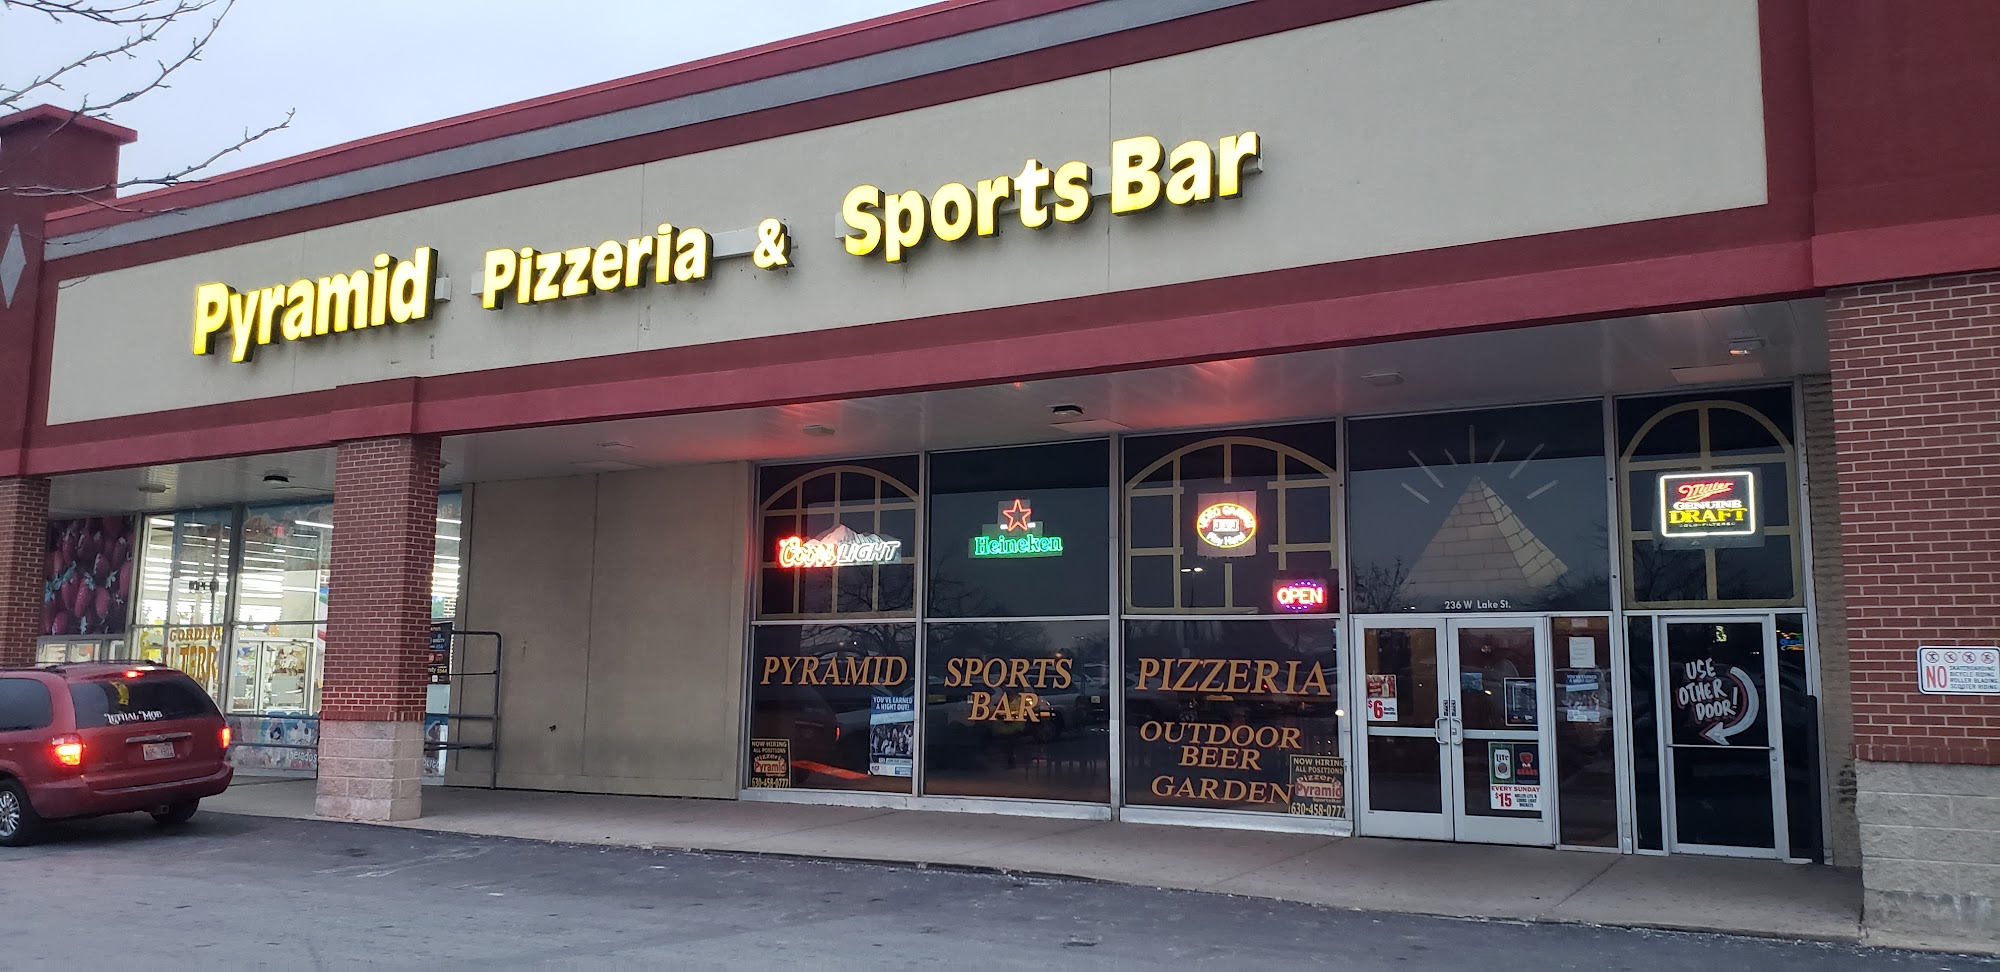 Pyramid Sports Bar & Pizzeria